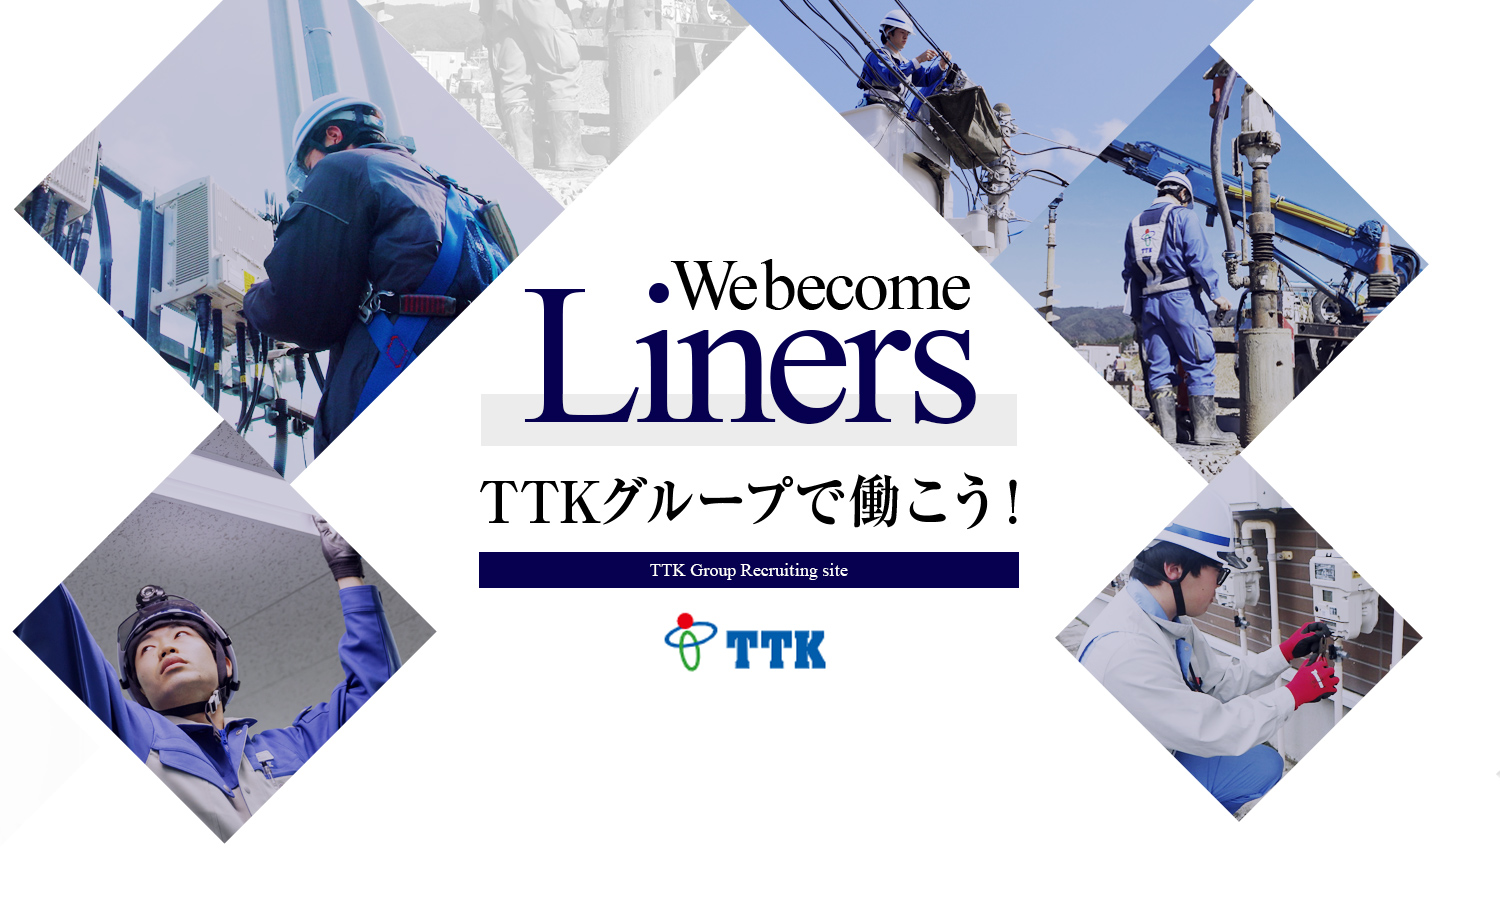 We become Liners TTKグループで働こう！